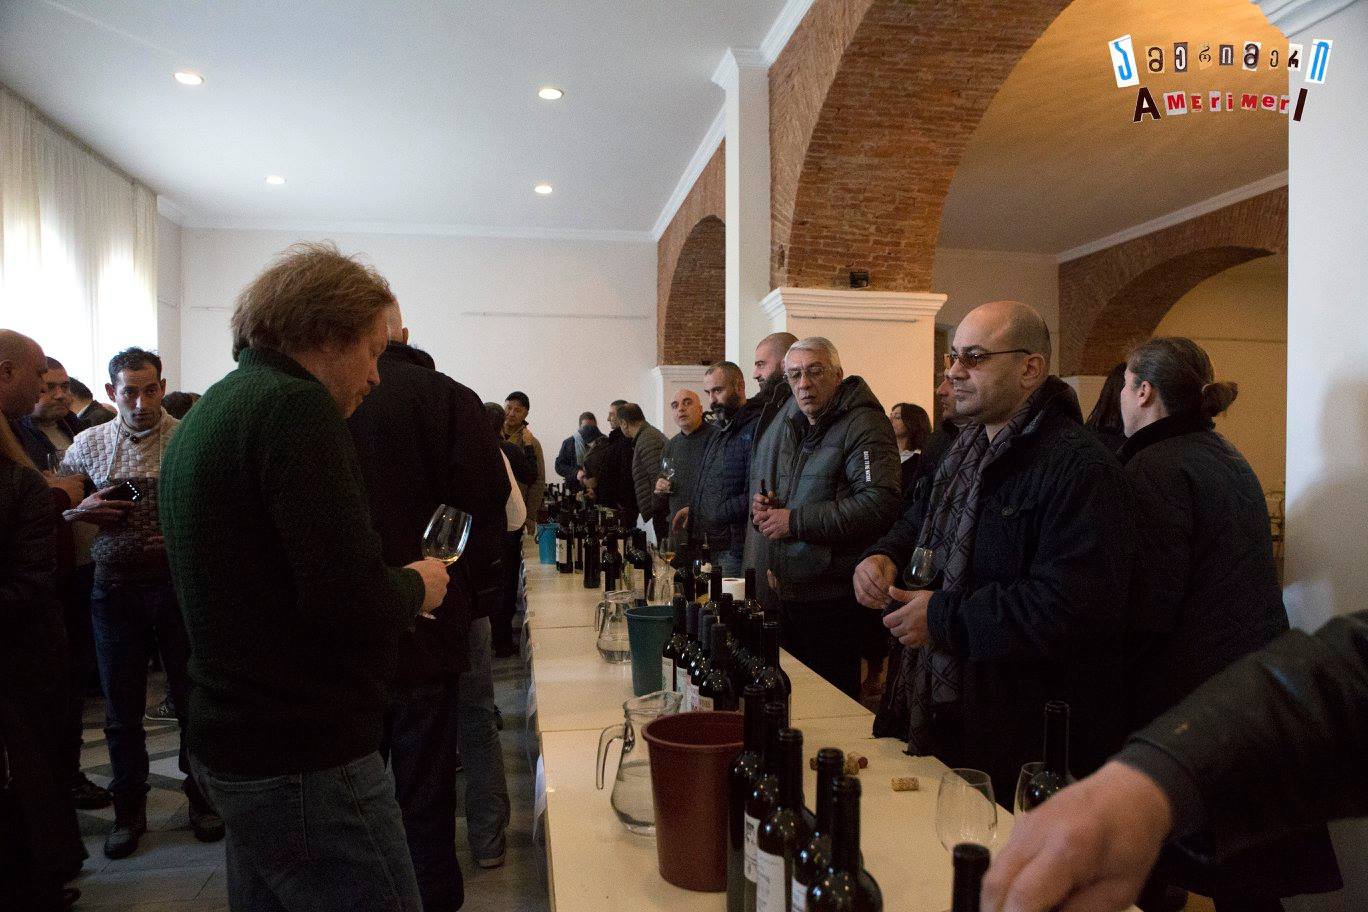 Amerimeri - expectations of winegrowers